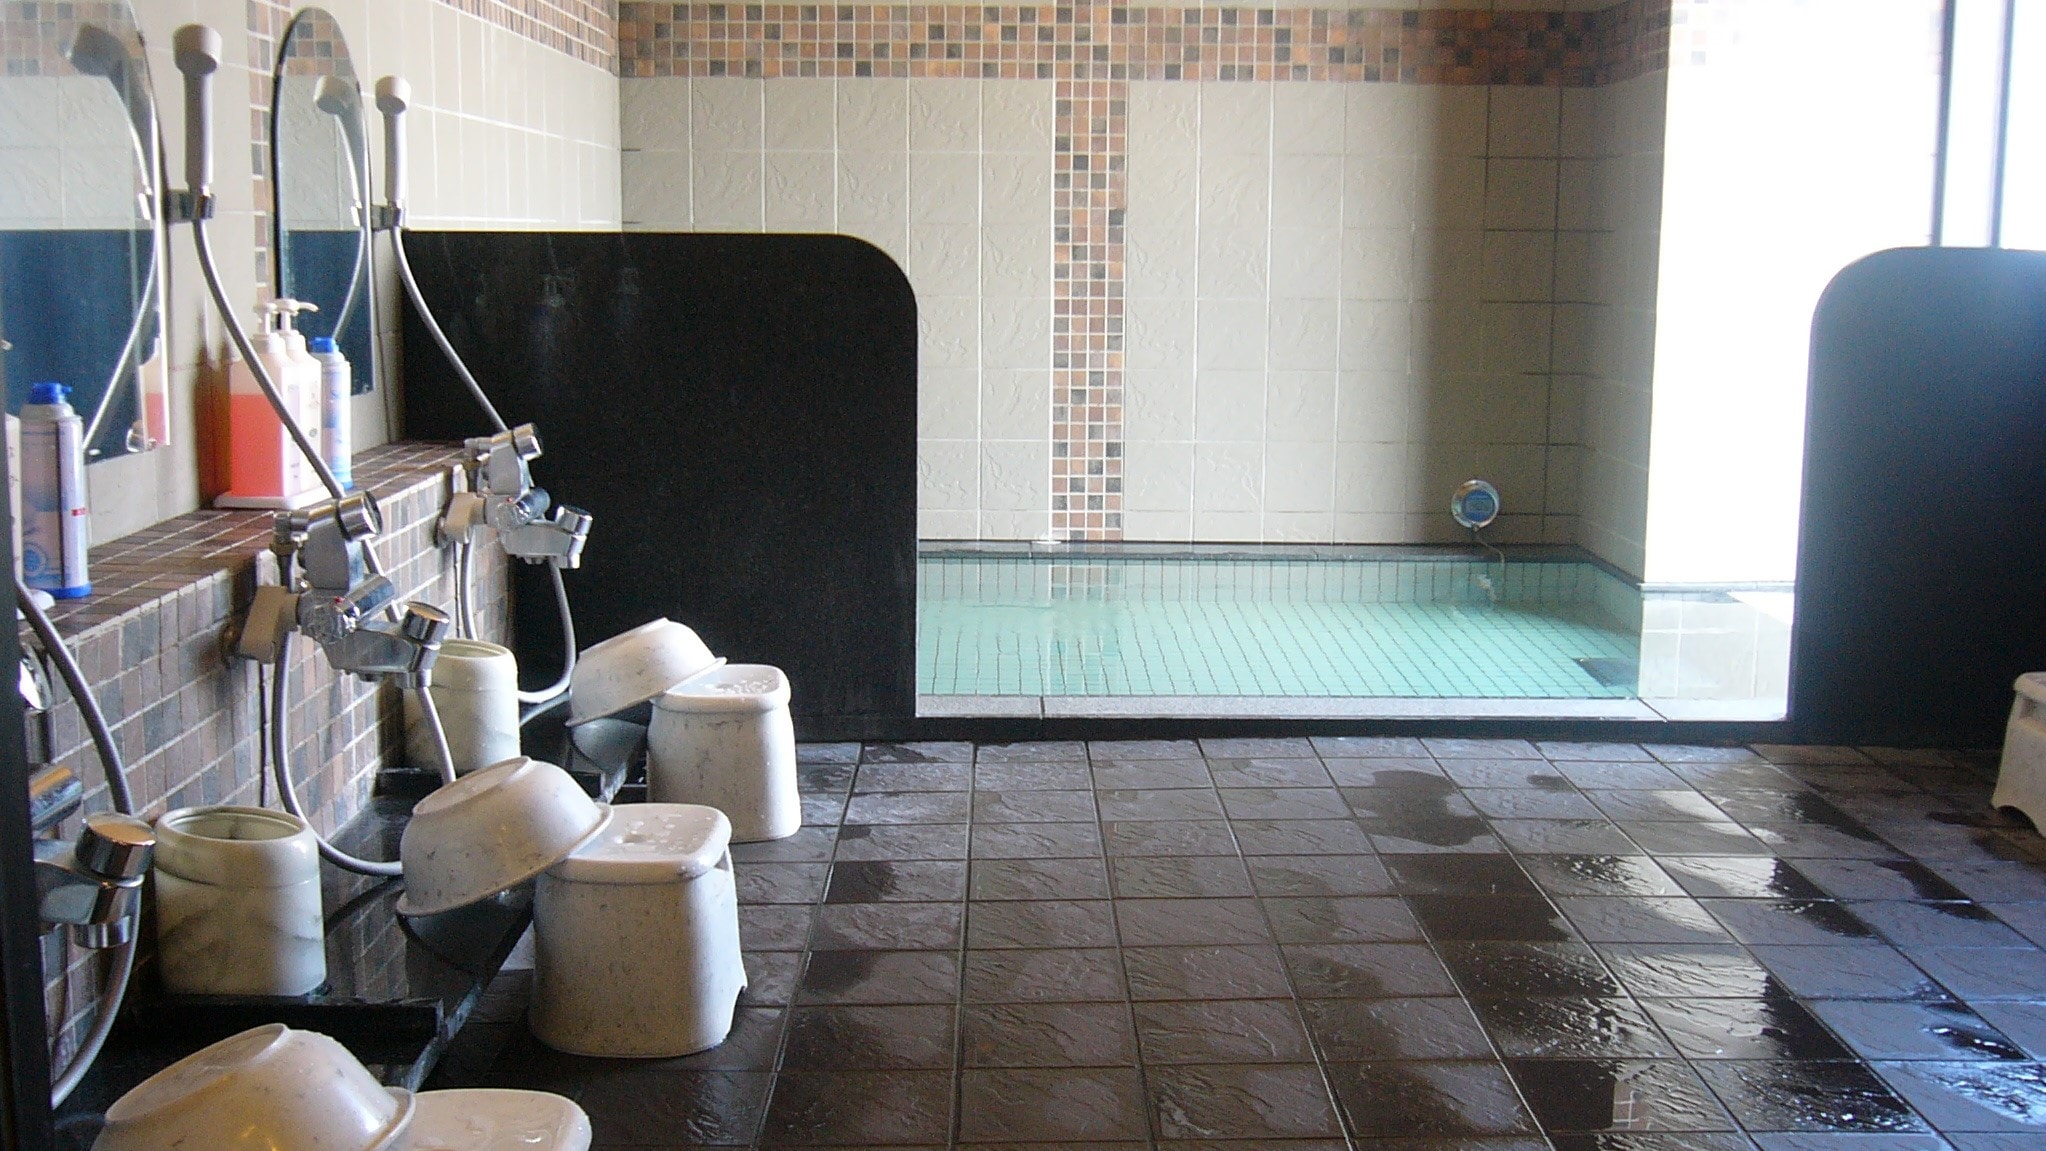 Inside the men's bath ☆ Shampoo, conditioner, body shampoo, shaving foam installed ☆